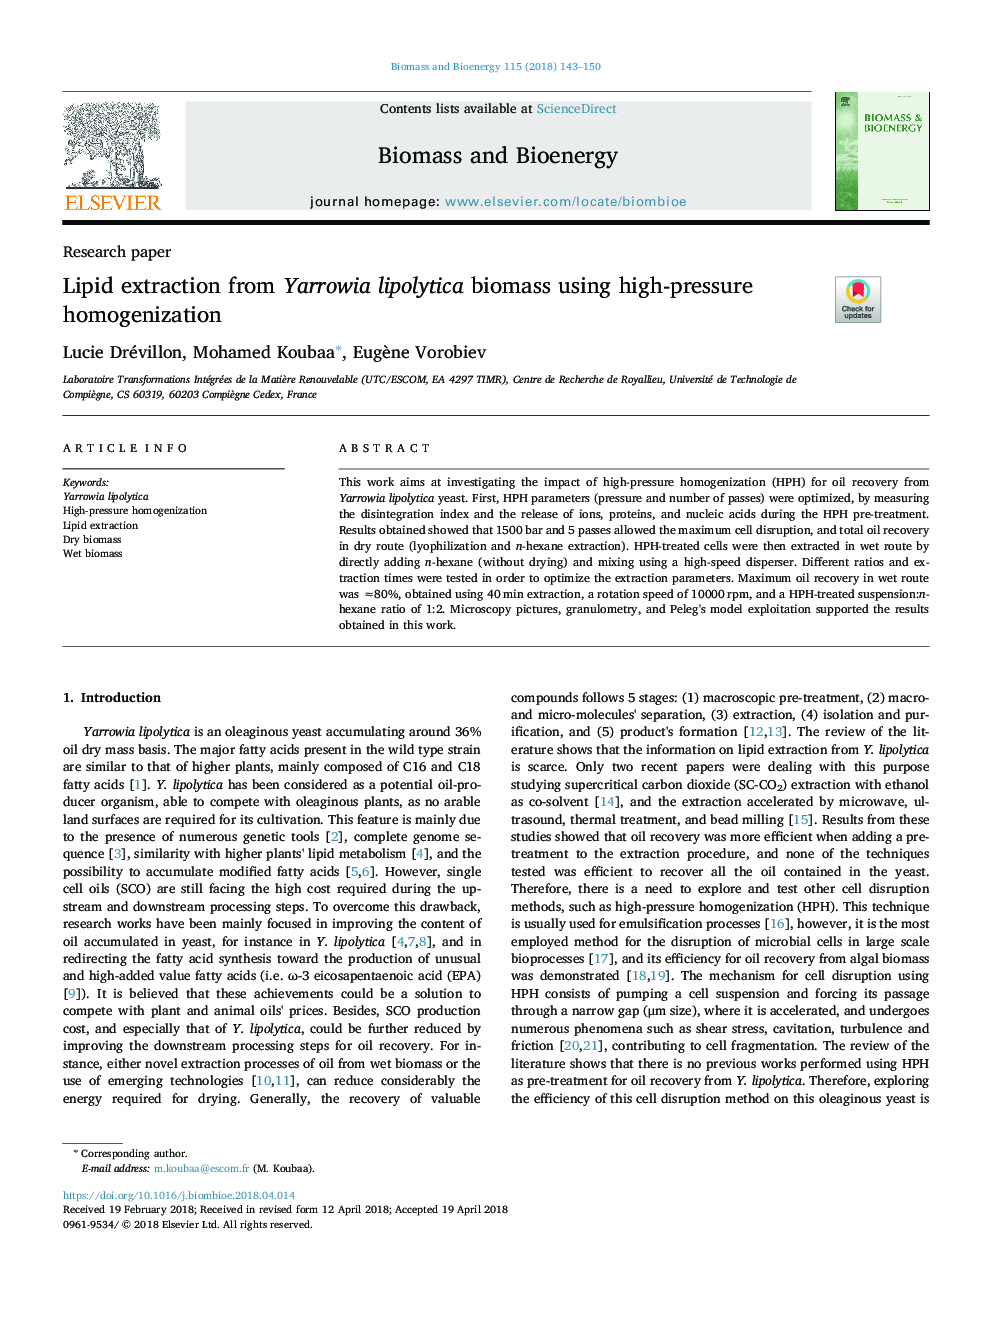 Lipid extraction from Yarrowia lipolytica biomass using high-pressure homogenization